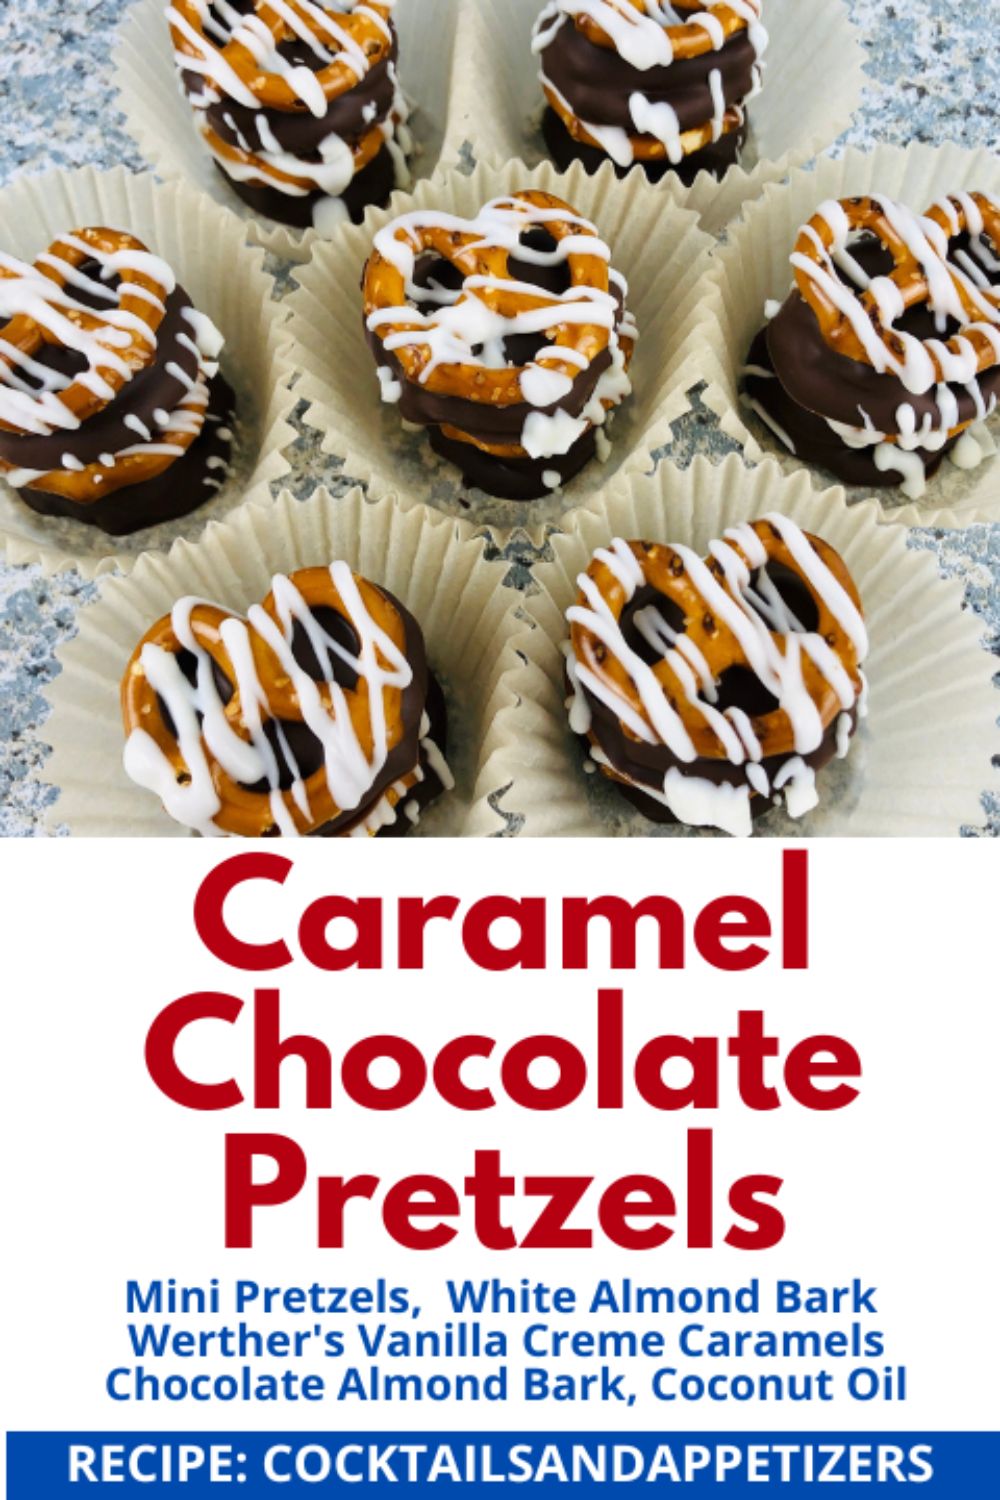 Caramel Chocolate Pretzels sit in paper baking cups.